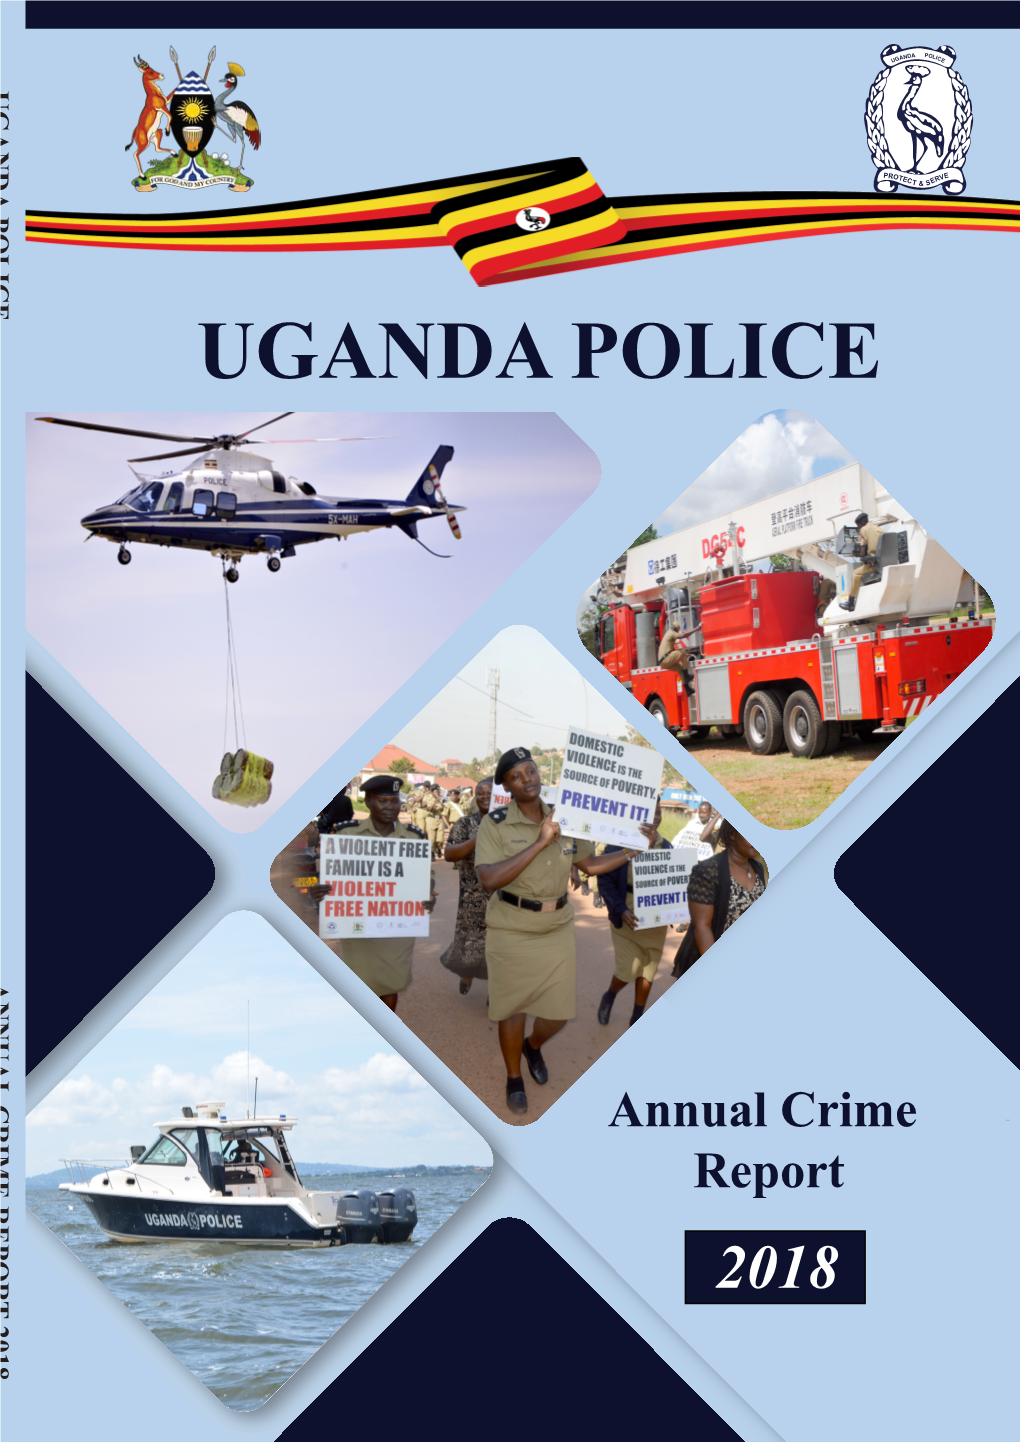 Uganda Police Annual Crime Report of 2018